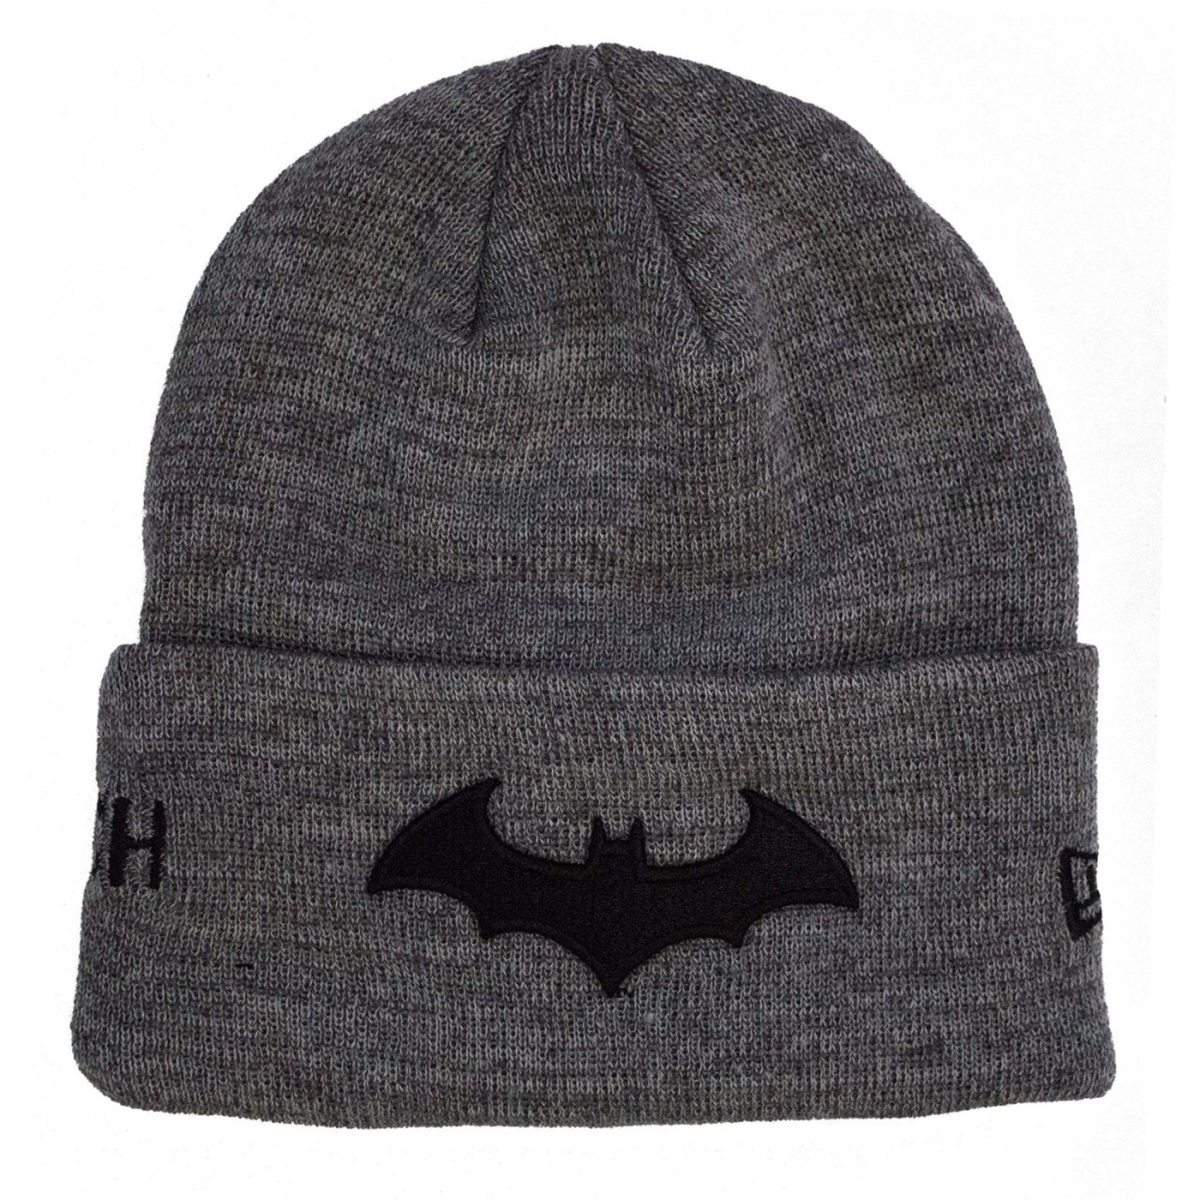 Picture of Batman beanbathushsymuni Batman HUSH Symbol Unisex Knit Beanie